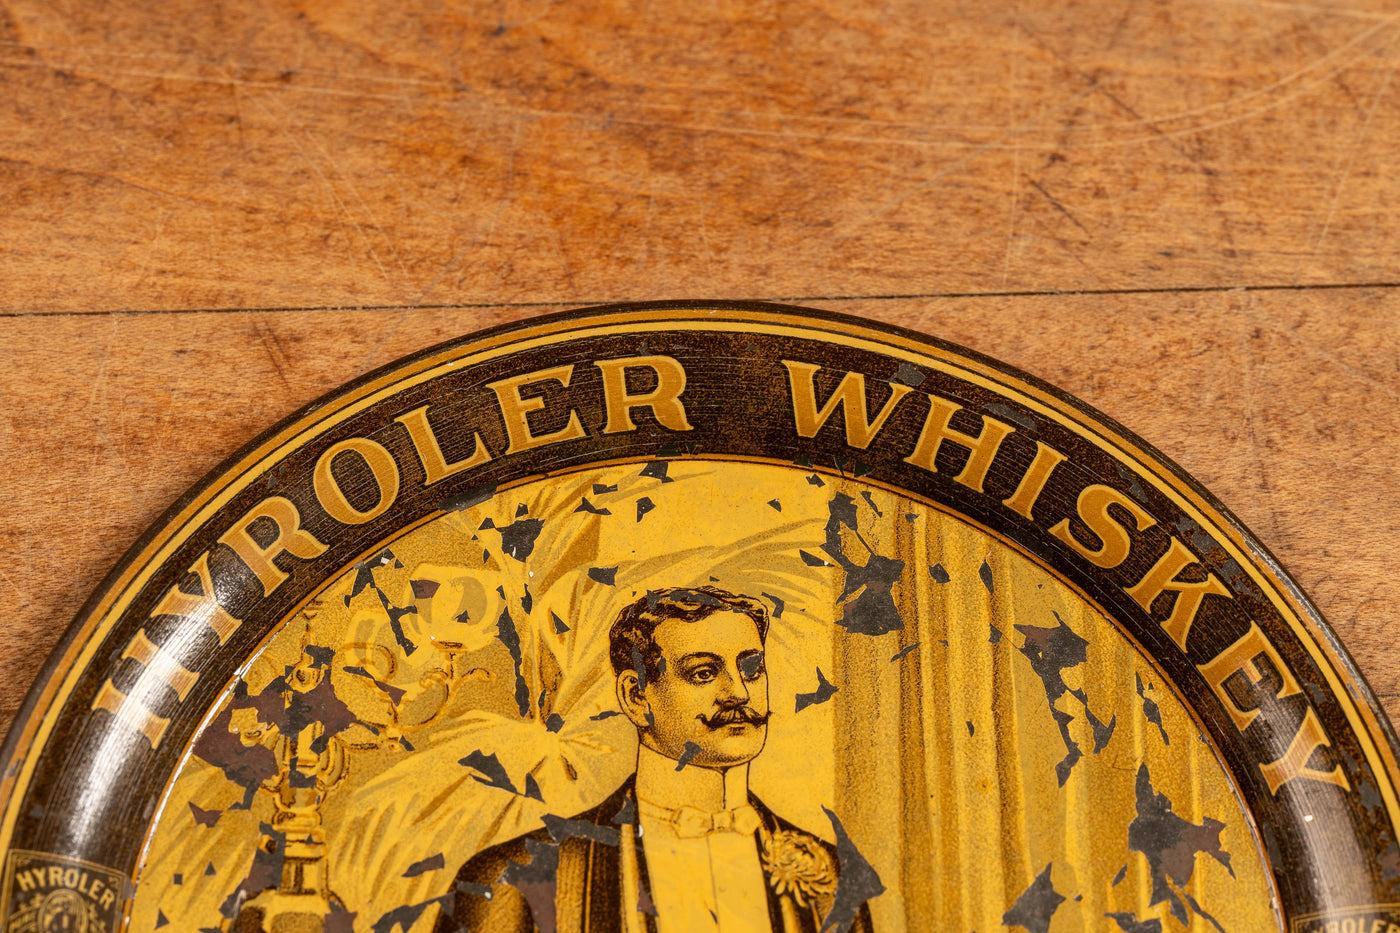 Early 20th Century Hyroler Whiskey Advertising Tip Tray